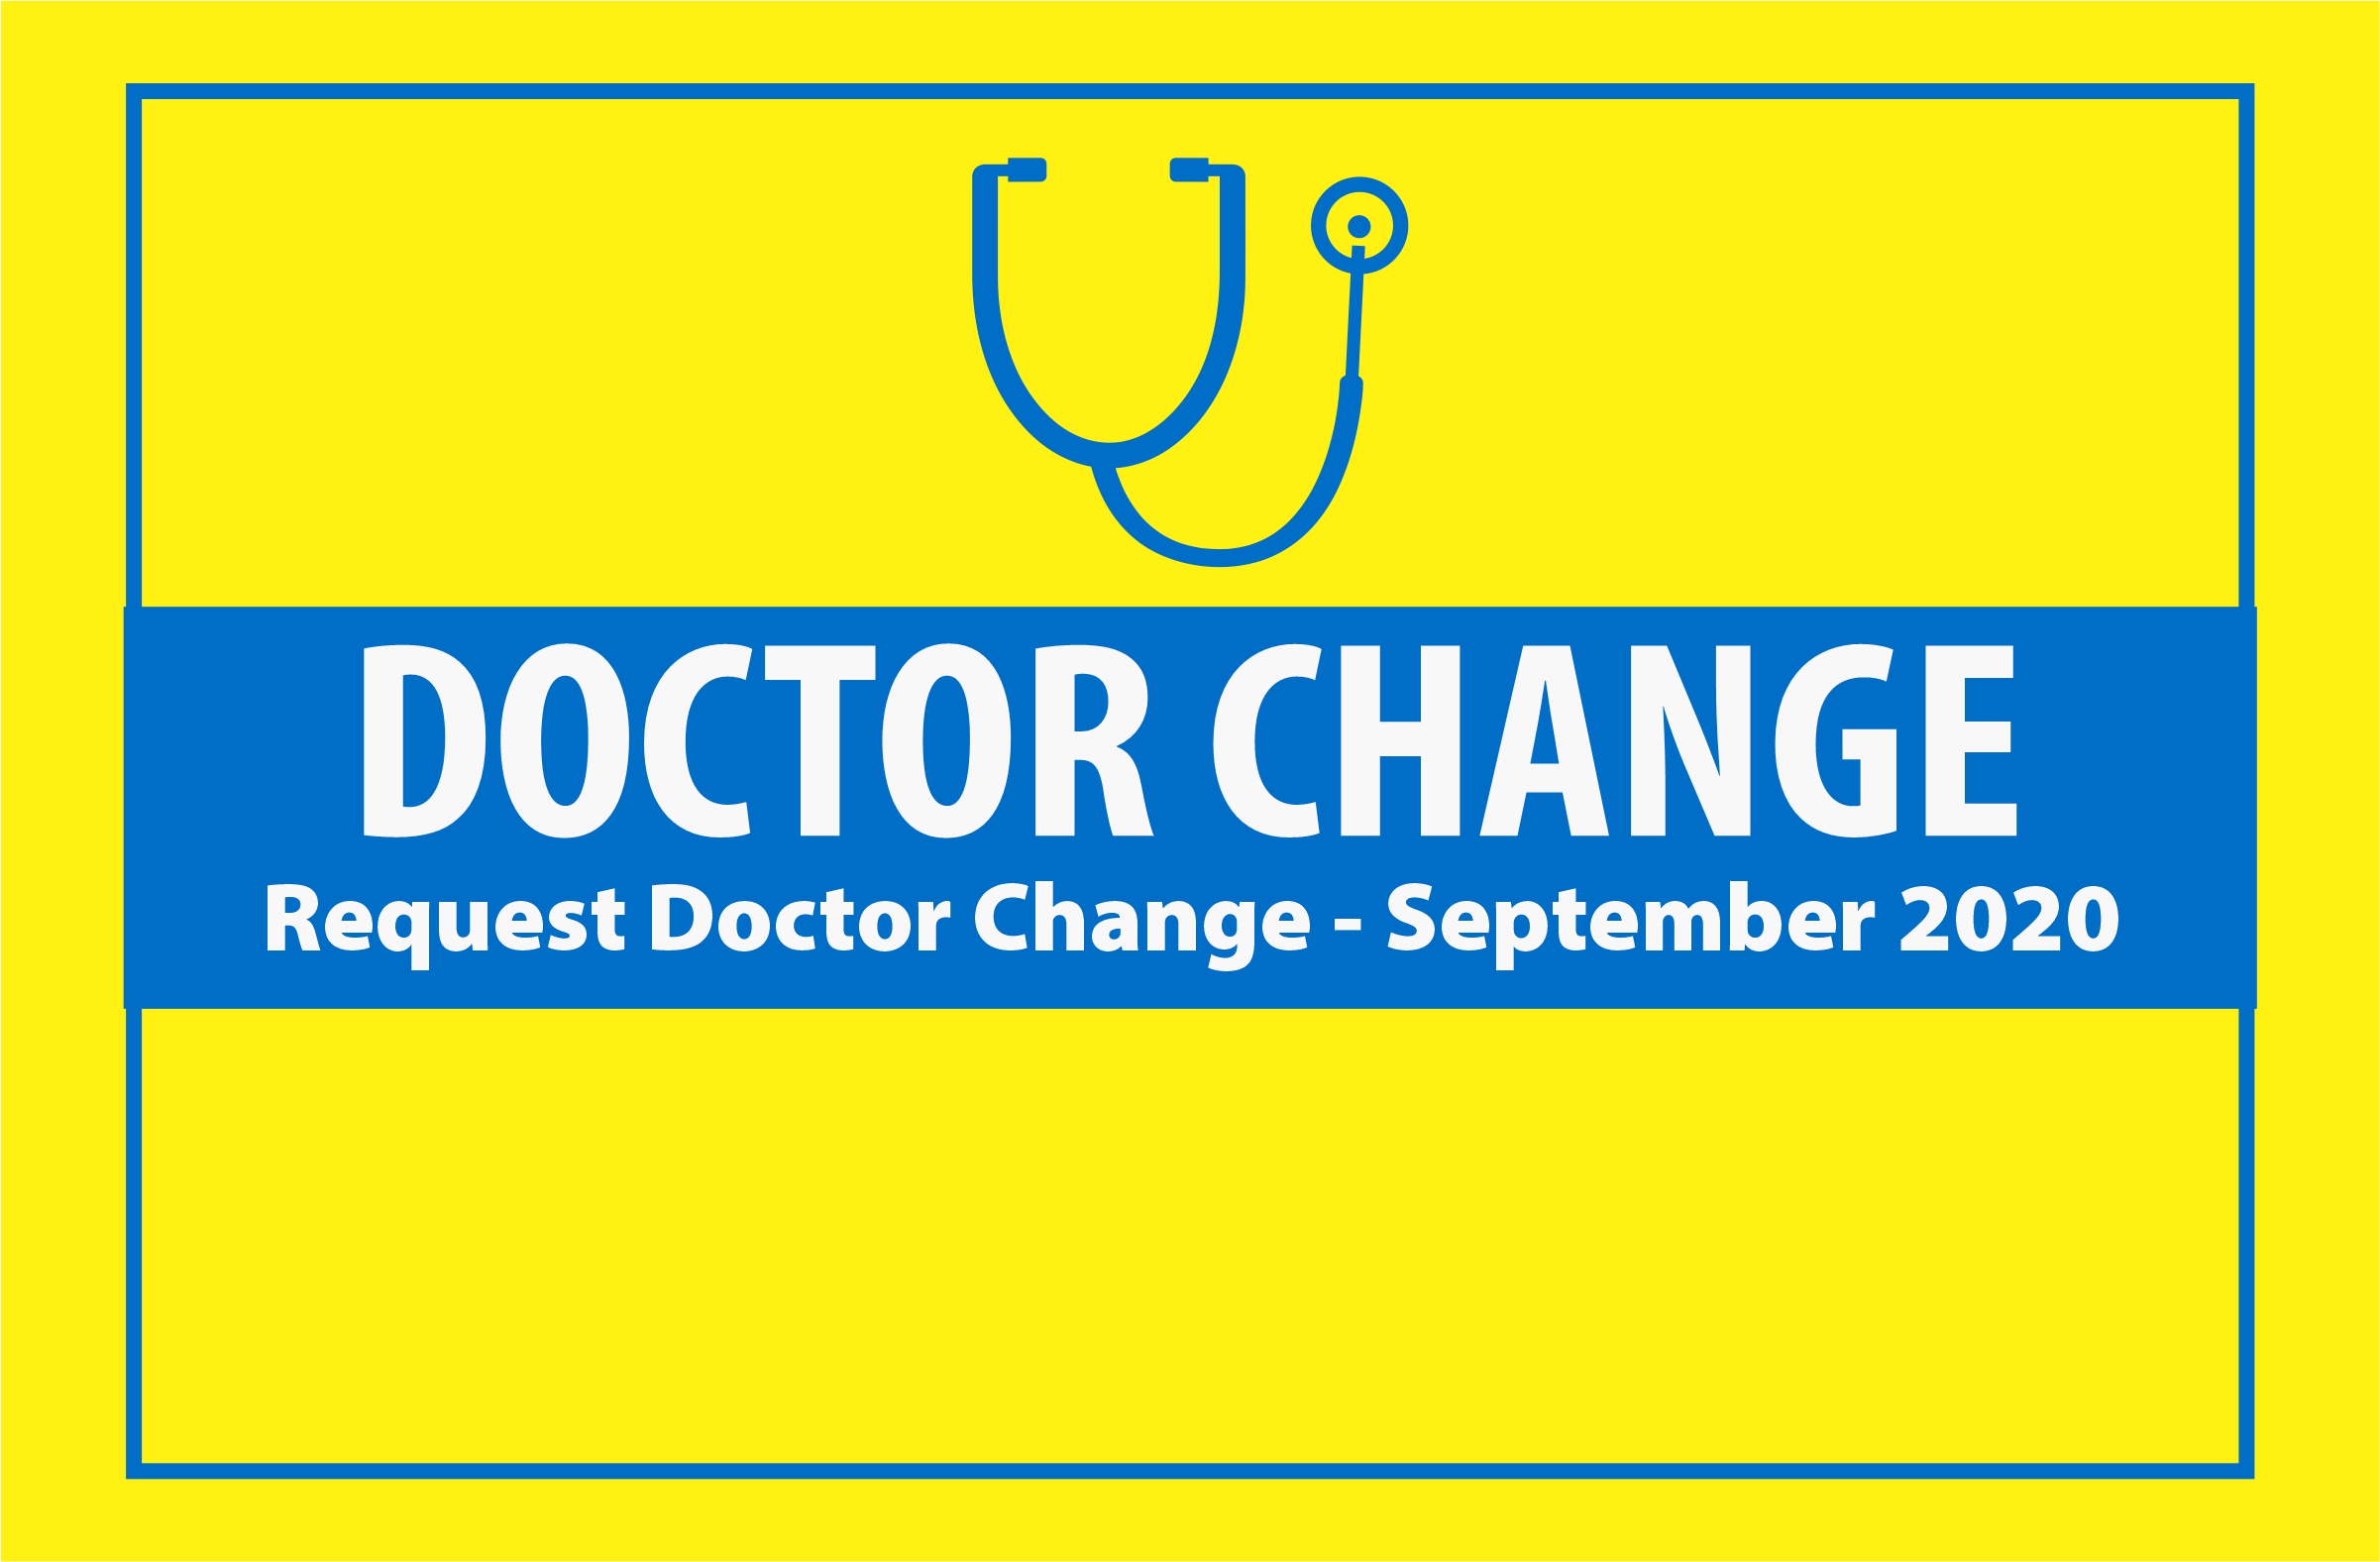 Request Doctor Change - September 2020